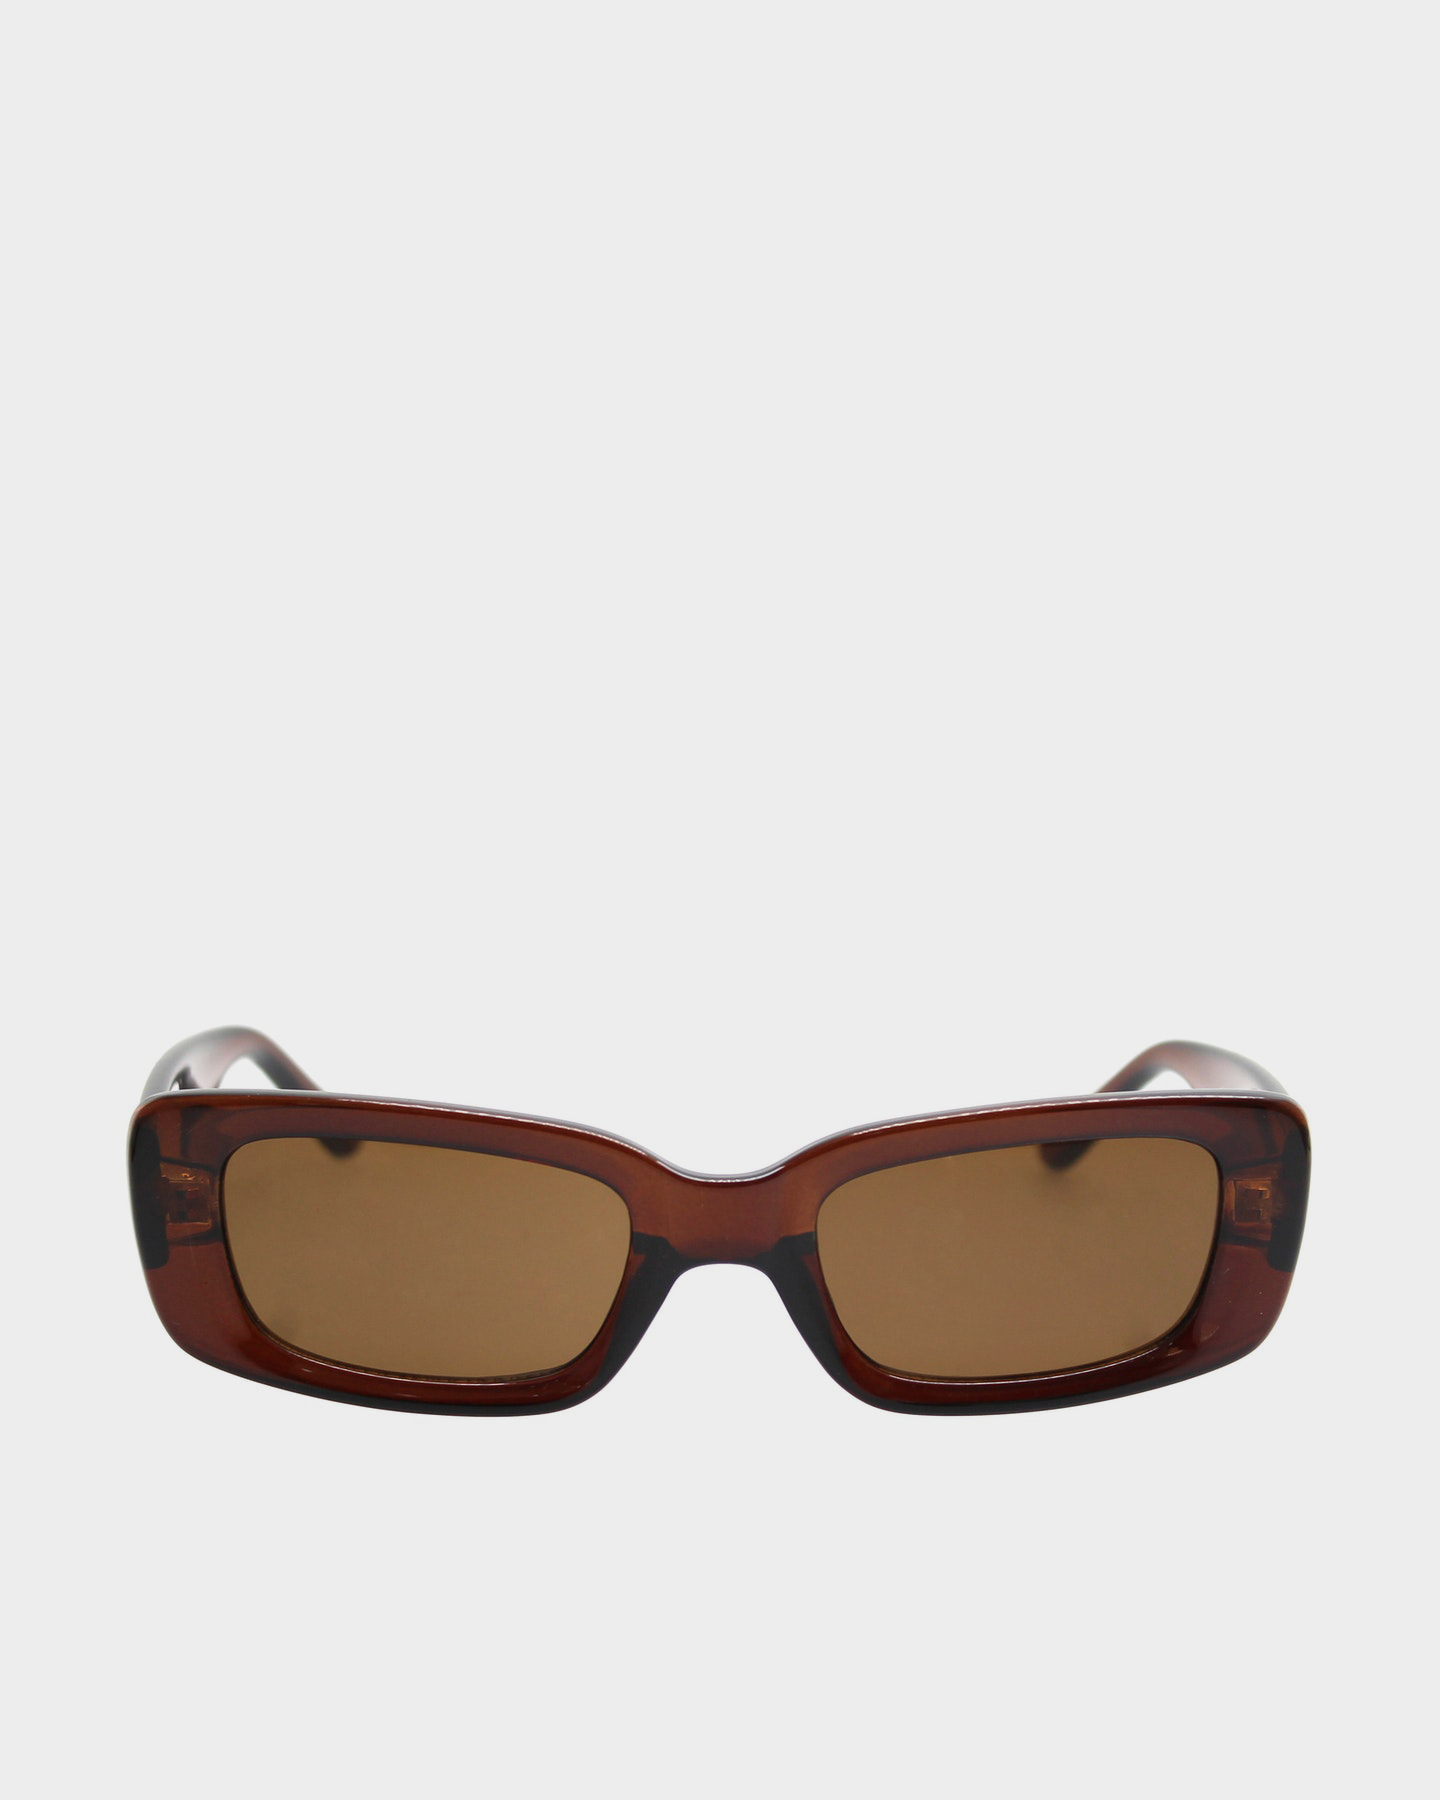 Reality Eyewear Bianca Chocolate Sunglasses - Chocolate | SurfStitch